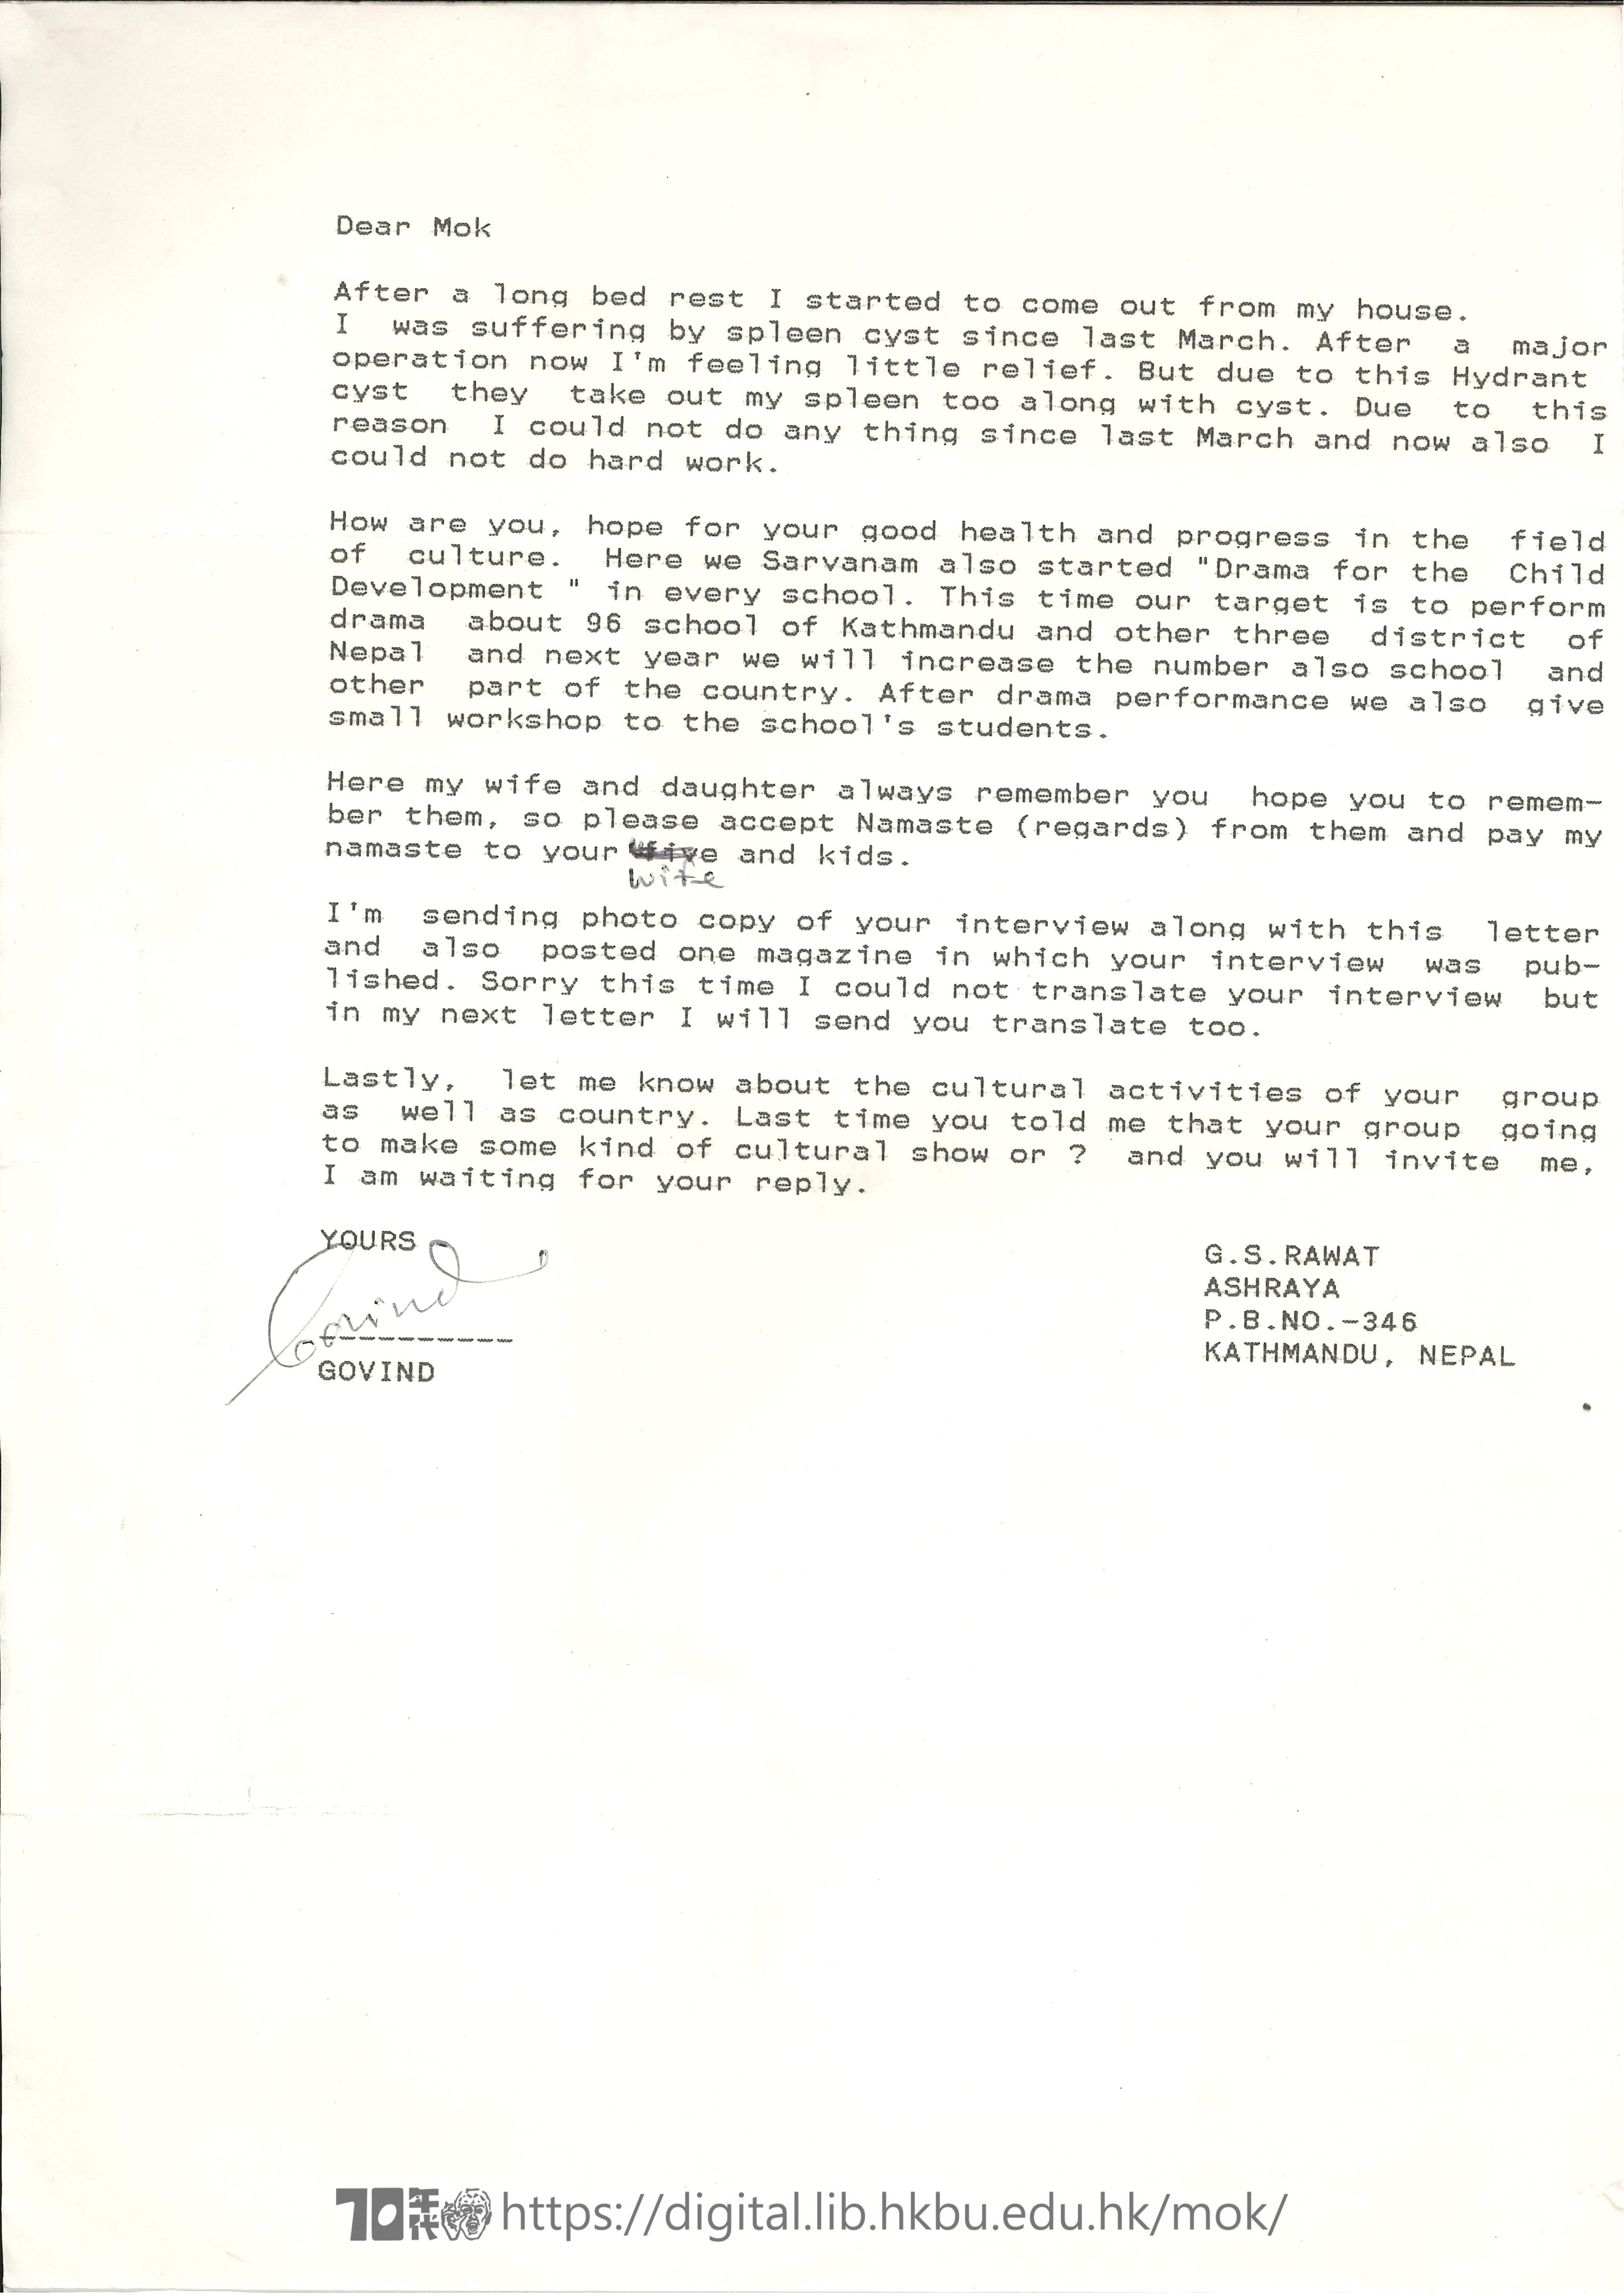   Letter from Govind (Nepal)  